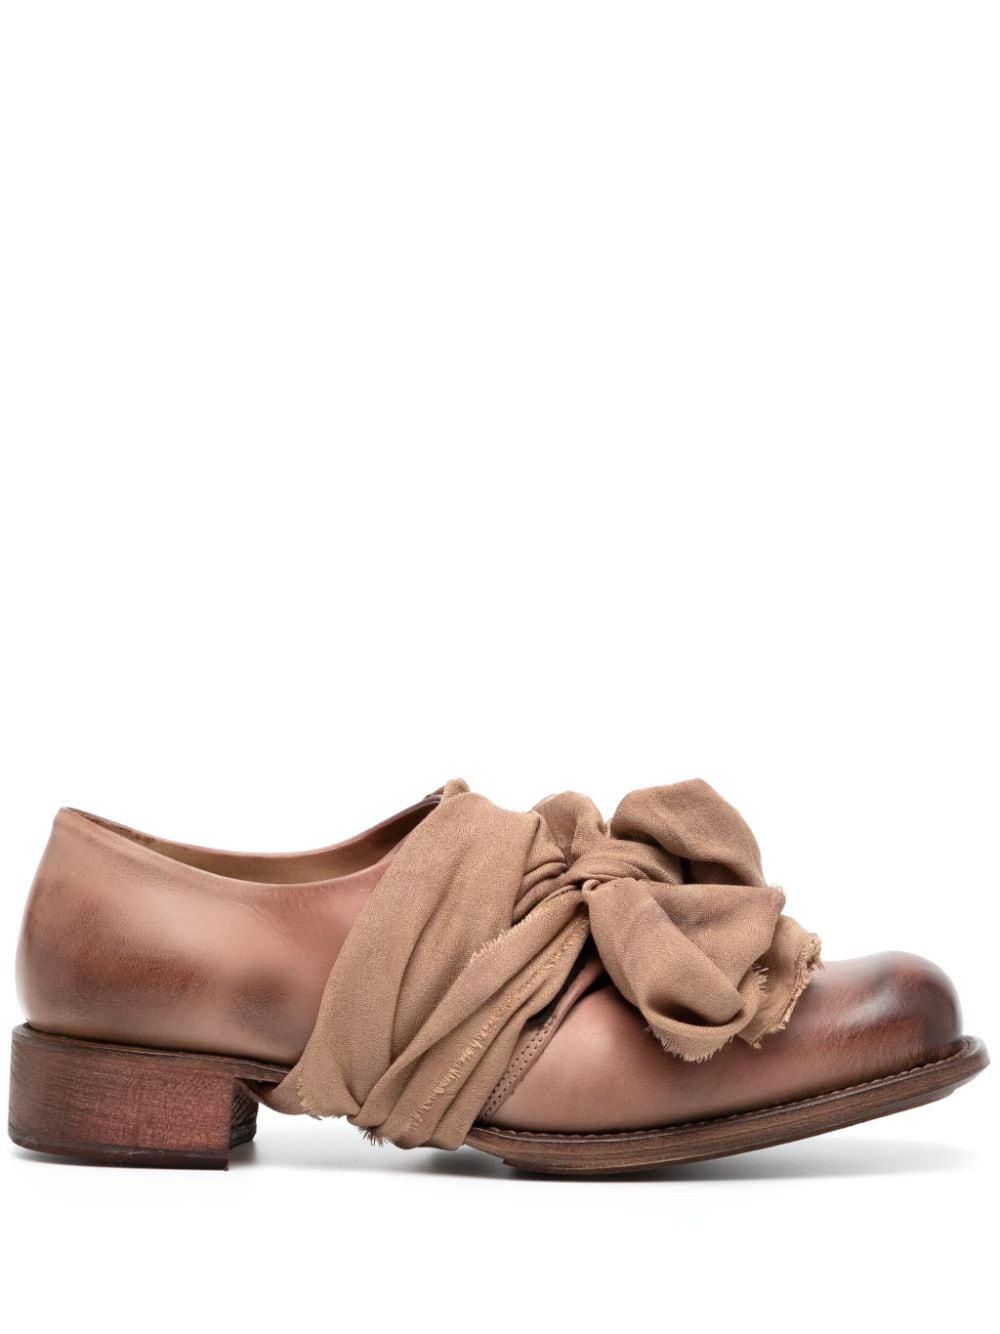 Cherevichkiotvichki faded lace-up leather shoes - Brown von Cherevichkiotvichki